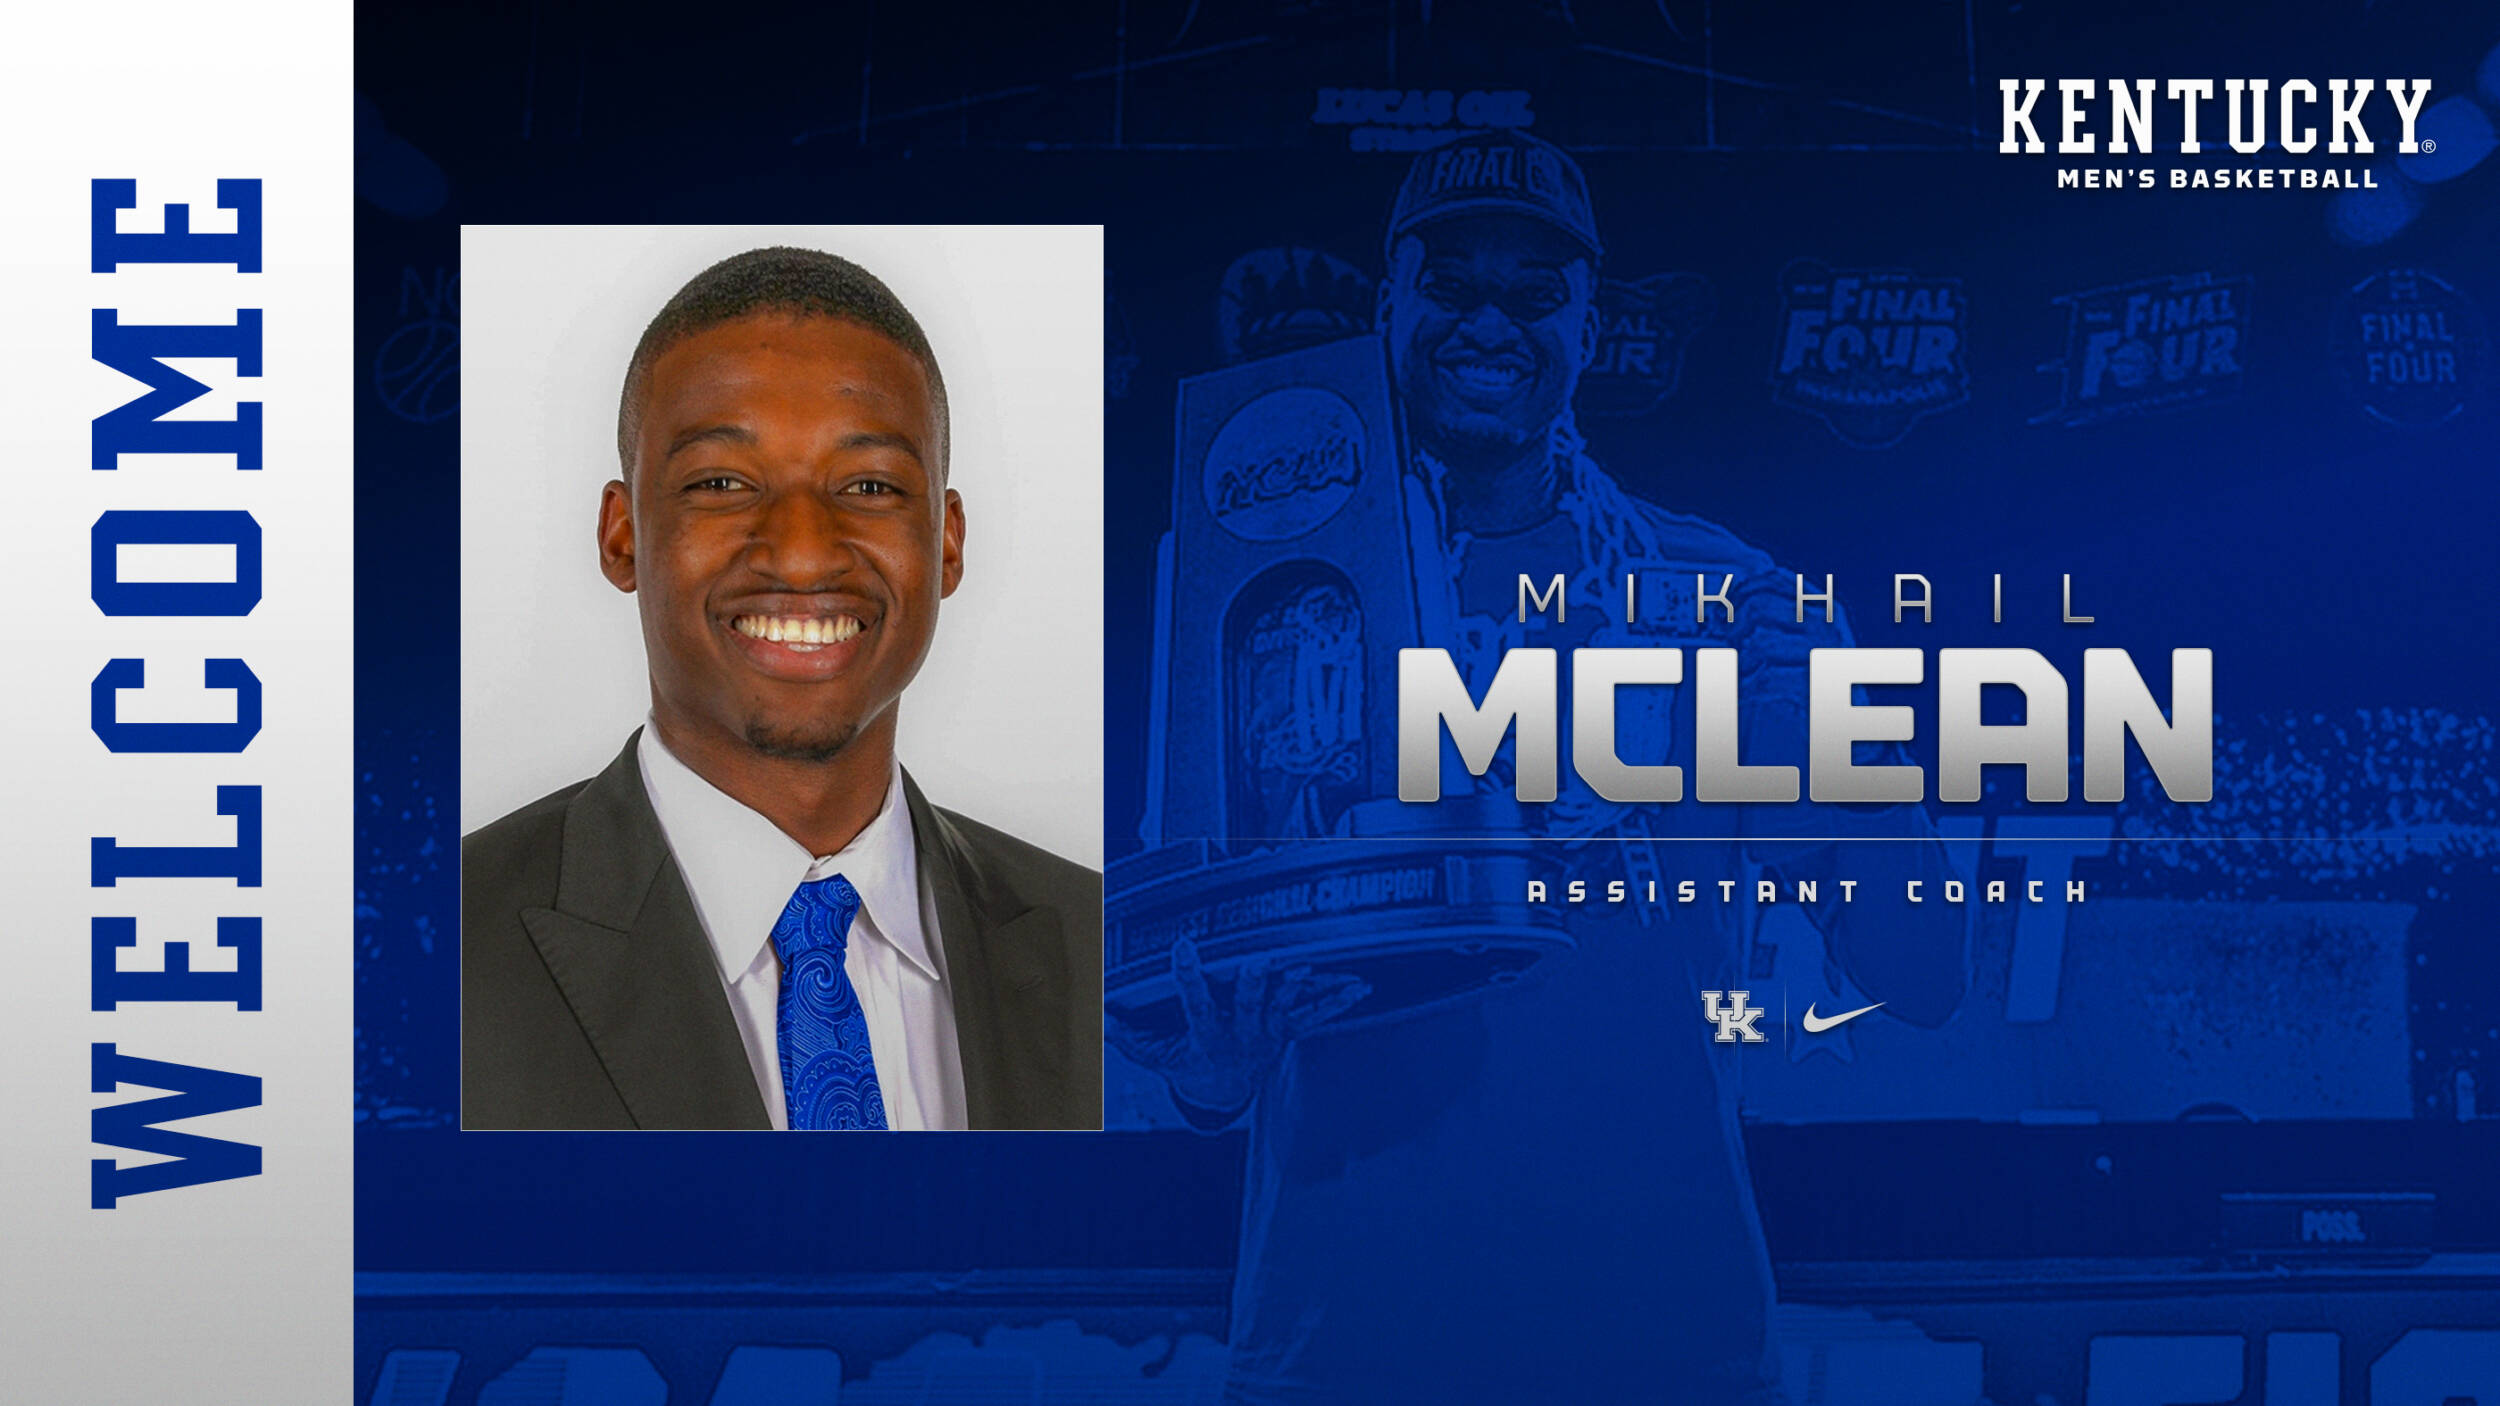 Kentucky Men’s Basketball Adds Mikhail McLean to Staff